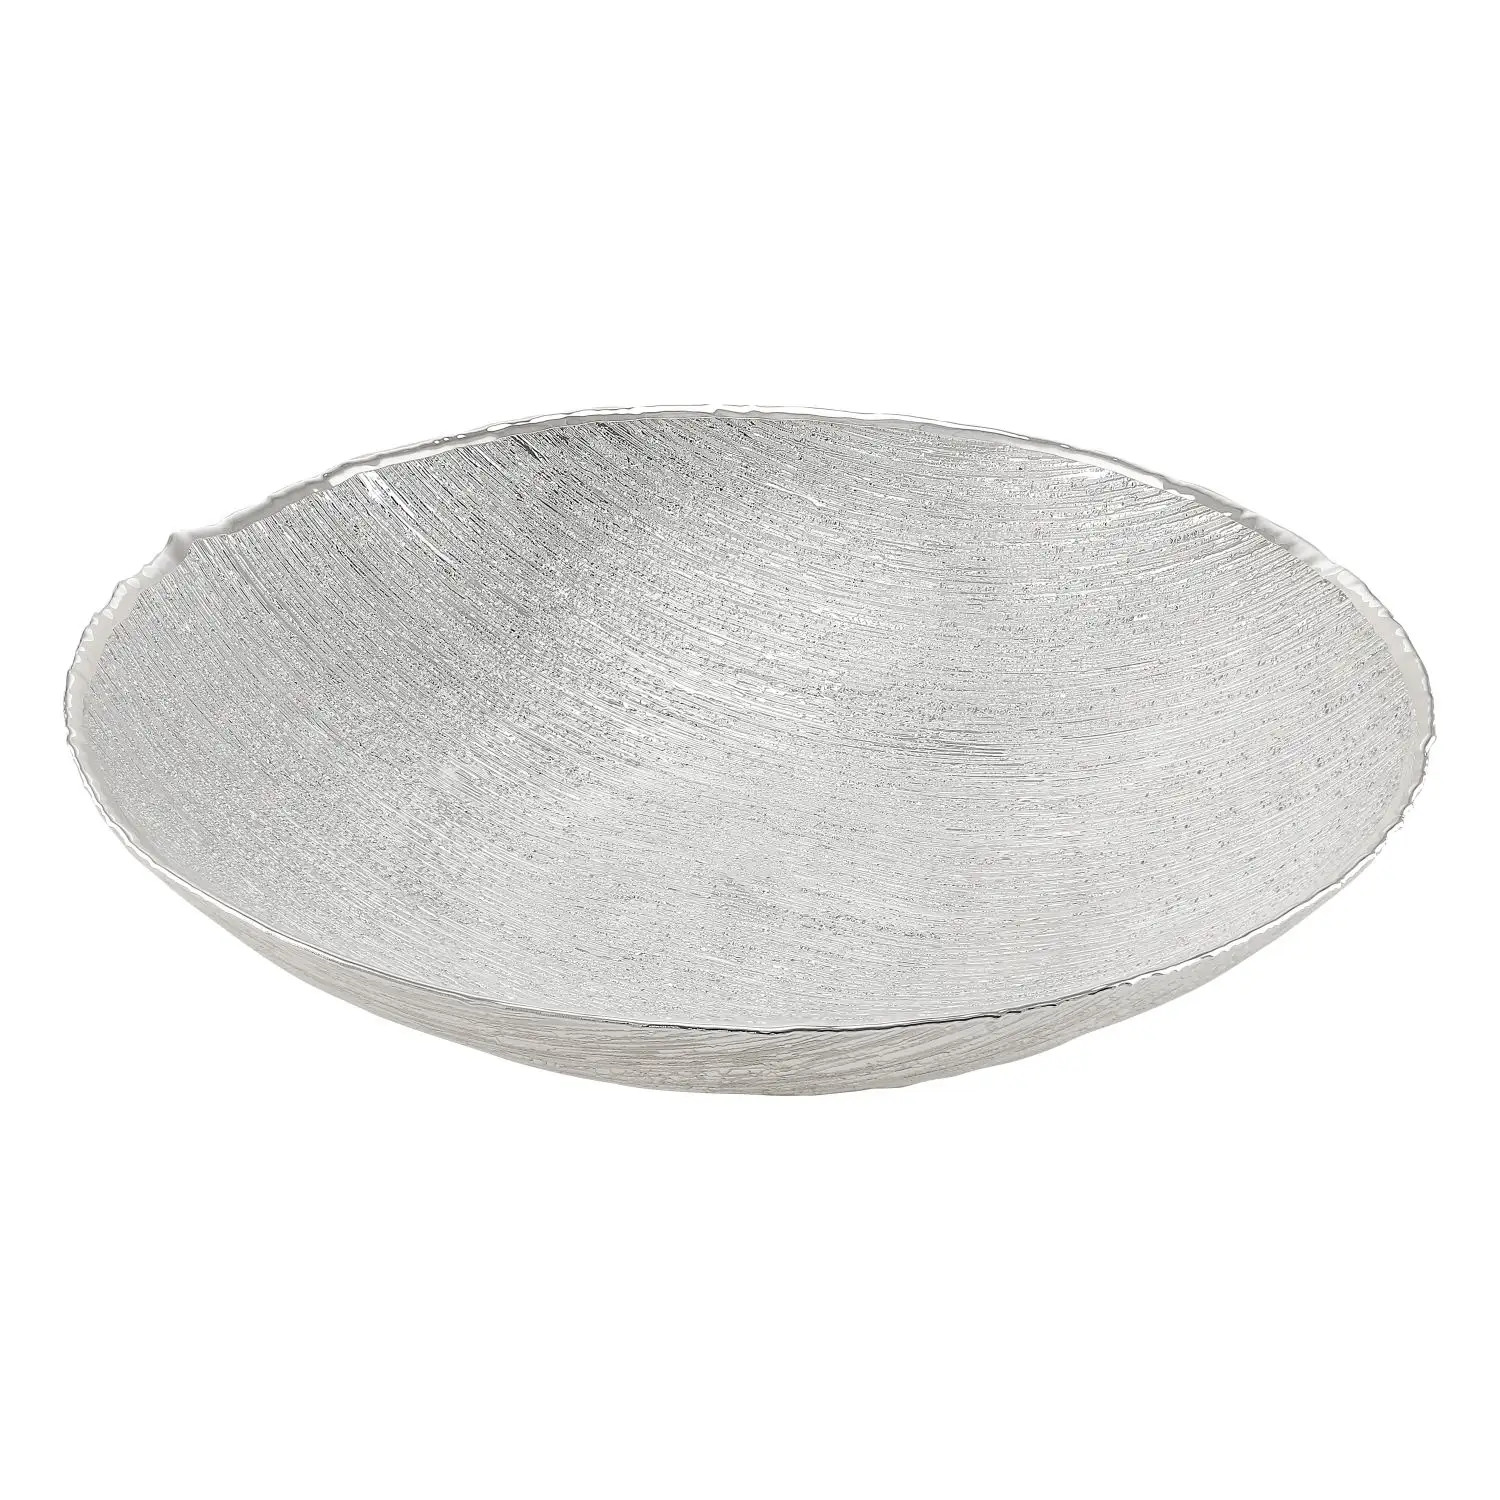 Блюдо стеклянное GRANITO (цвет серебро) диаметр 33 см